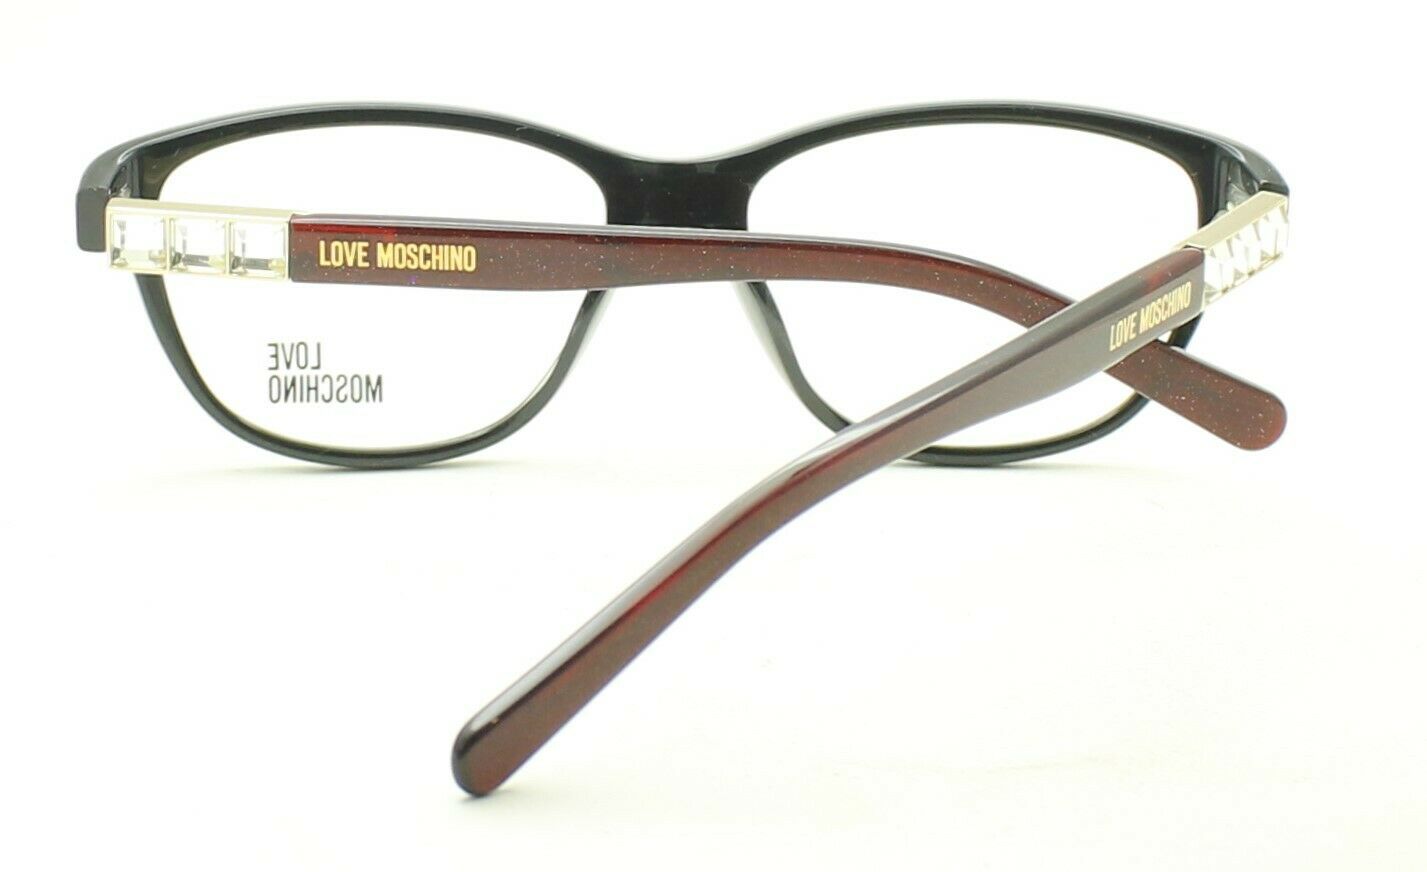 MOSCHINO LM 09 30400221 53mm Eyewear FRAMES RX Optical Glasses Eyeglasses - New